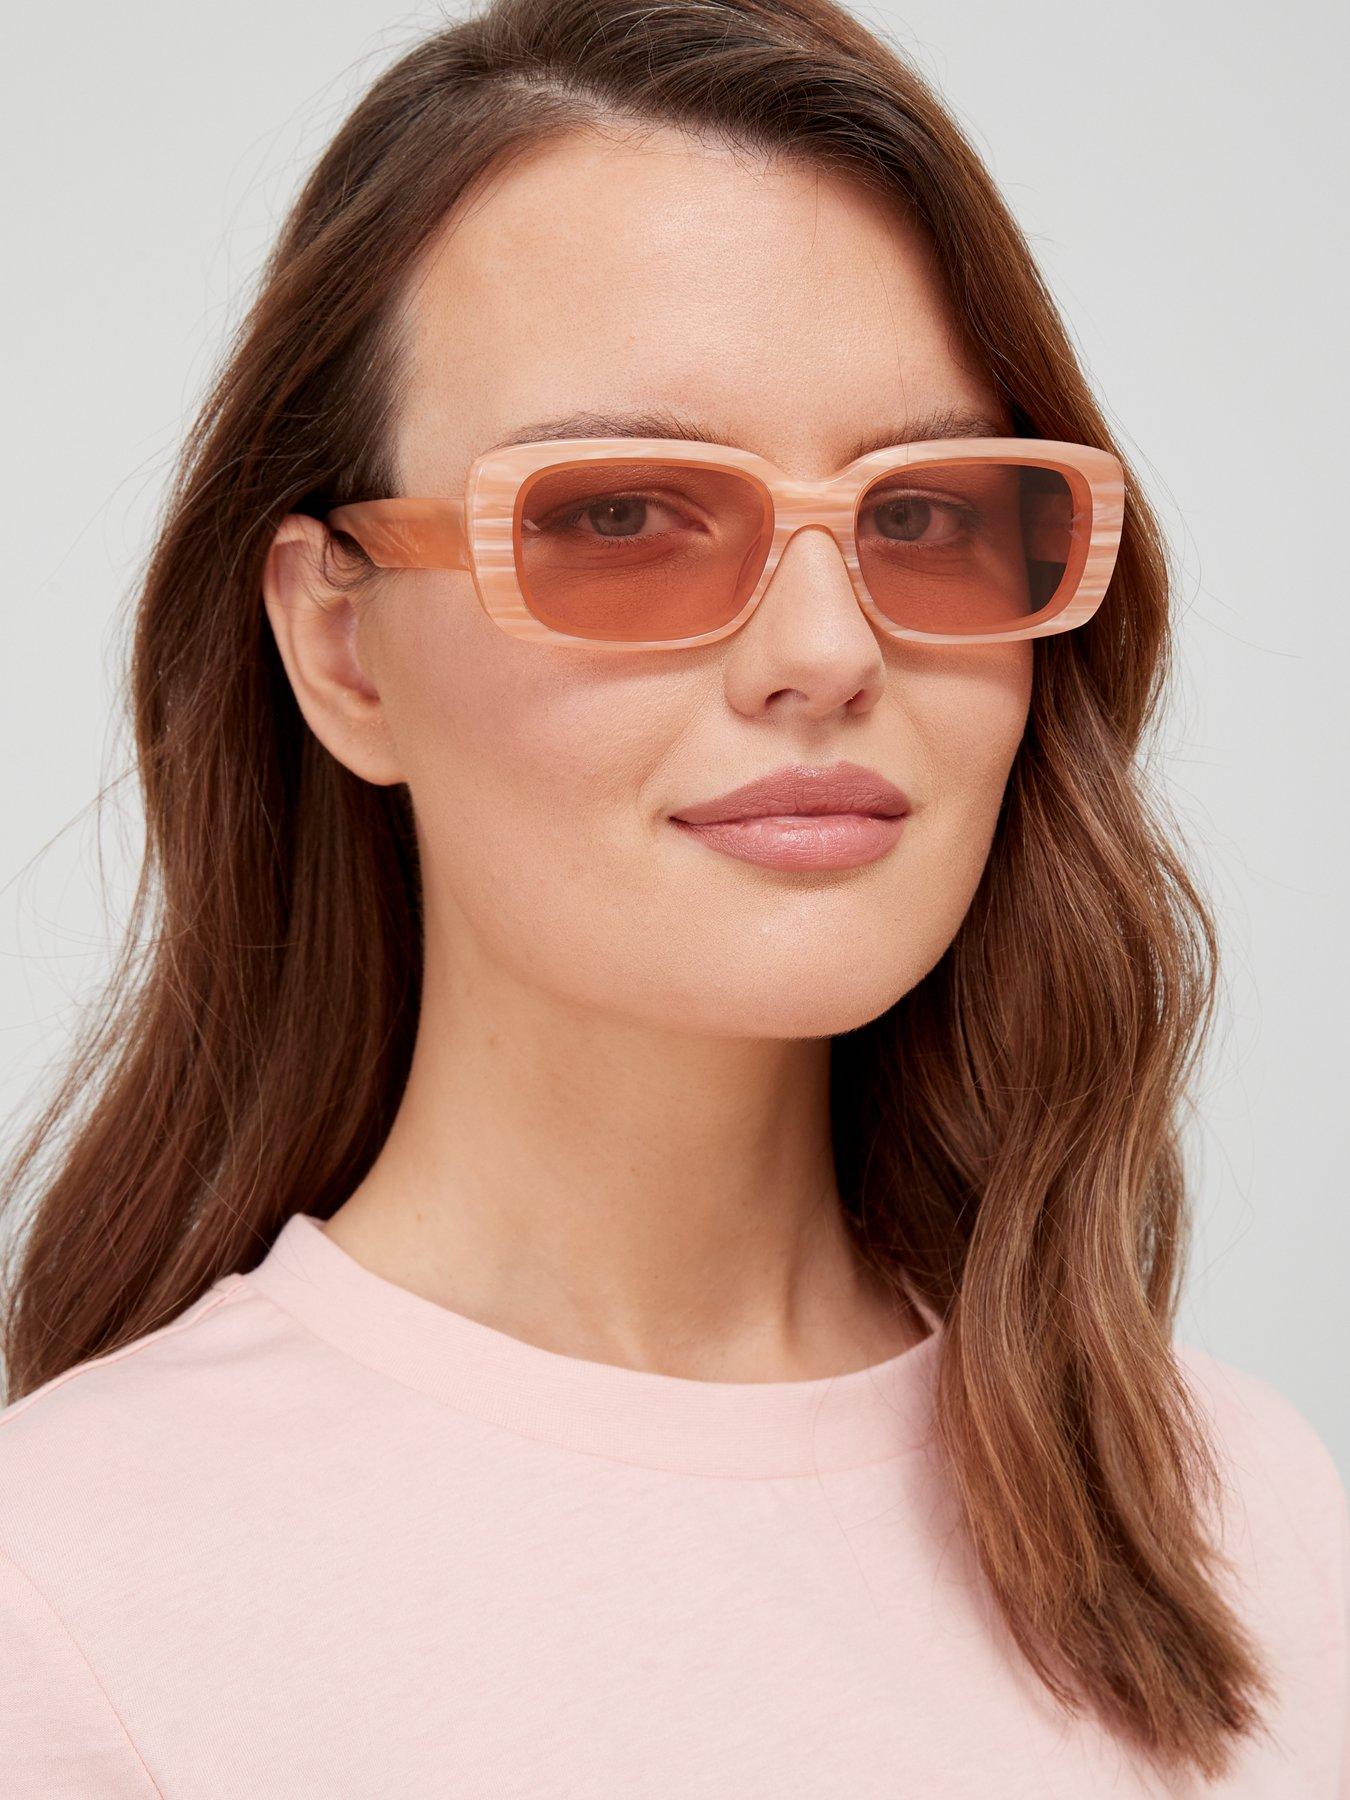 Alexander McQueen Sunglasses in Pink Womens Accessories Sunglasses 